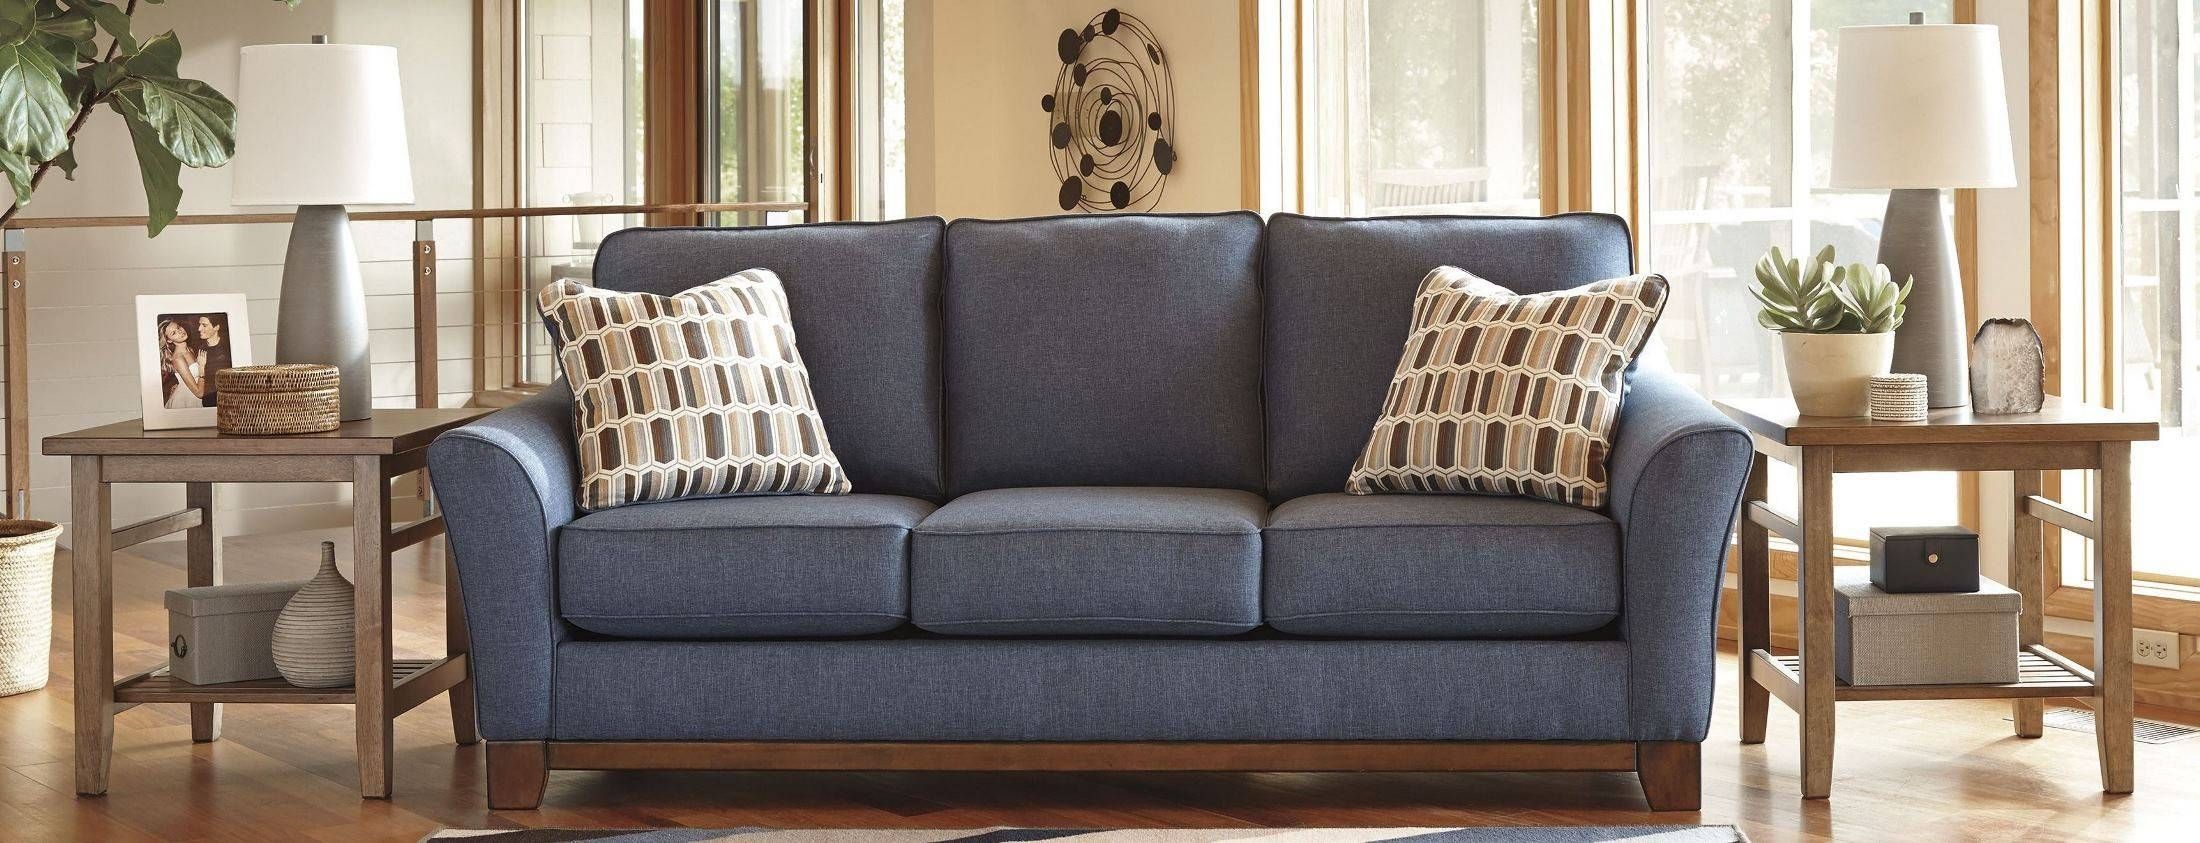 Janley Denim Sofa For Denim Sofas And Loveseats (View 13 of 15)